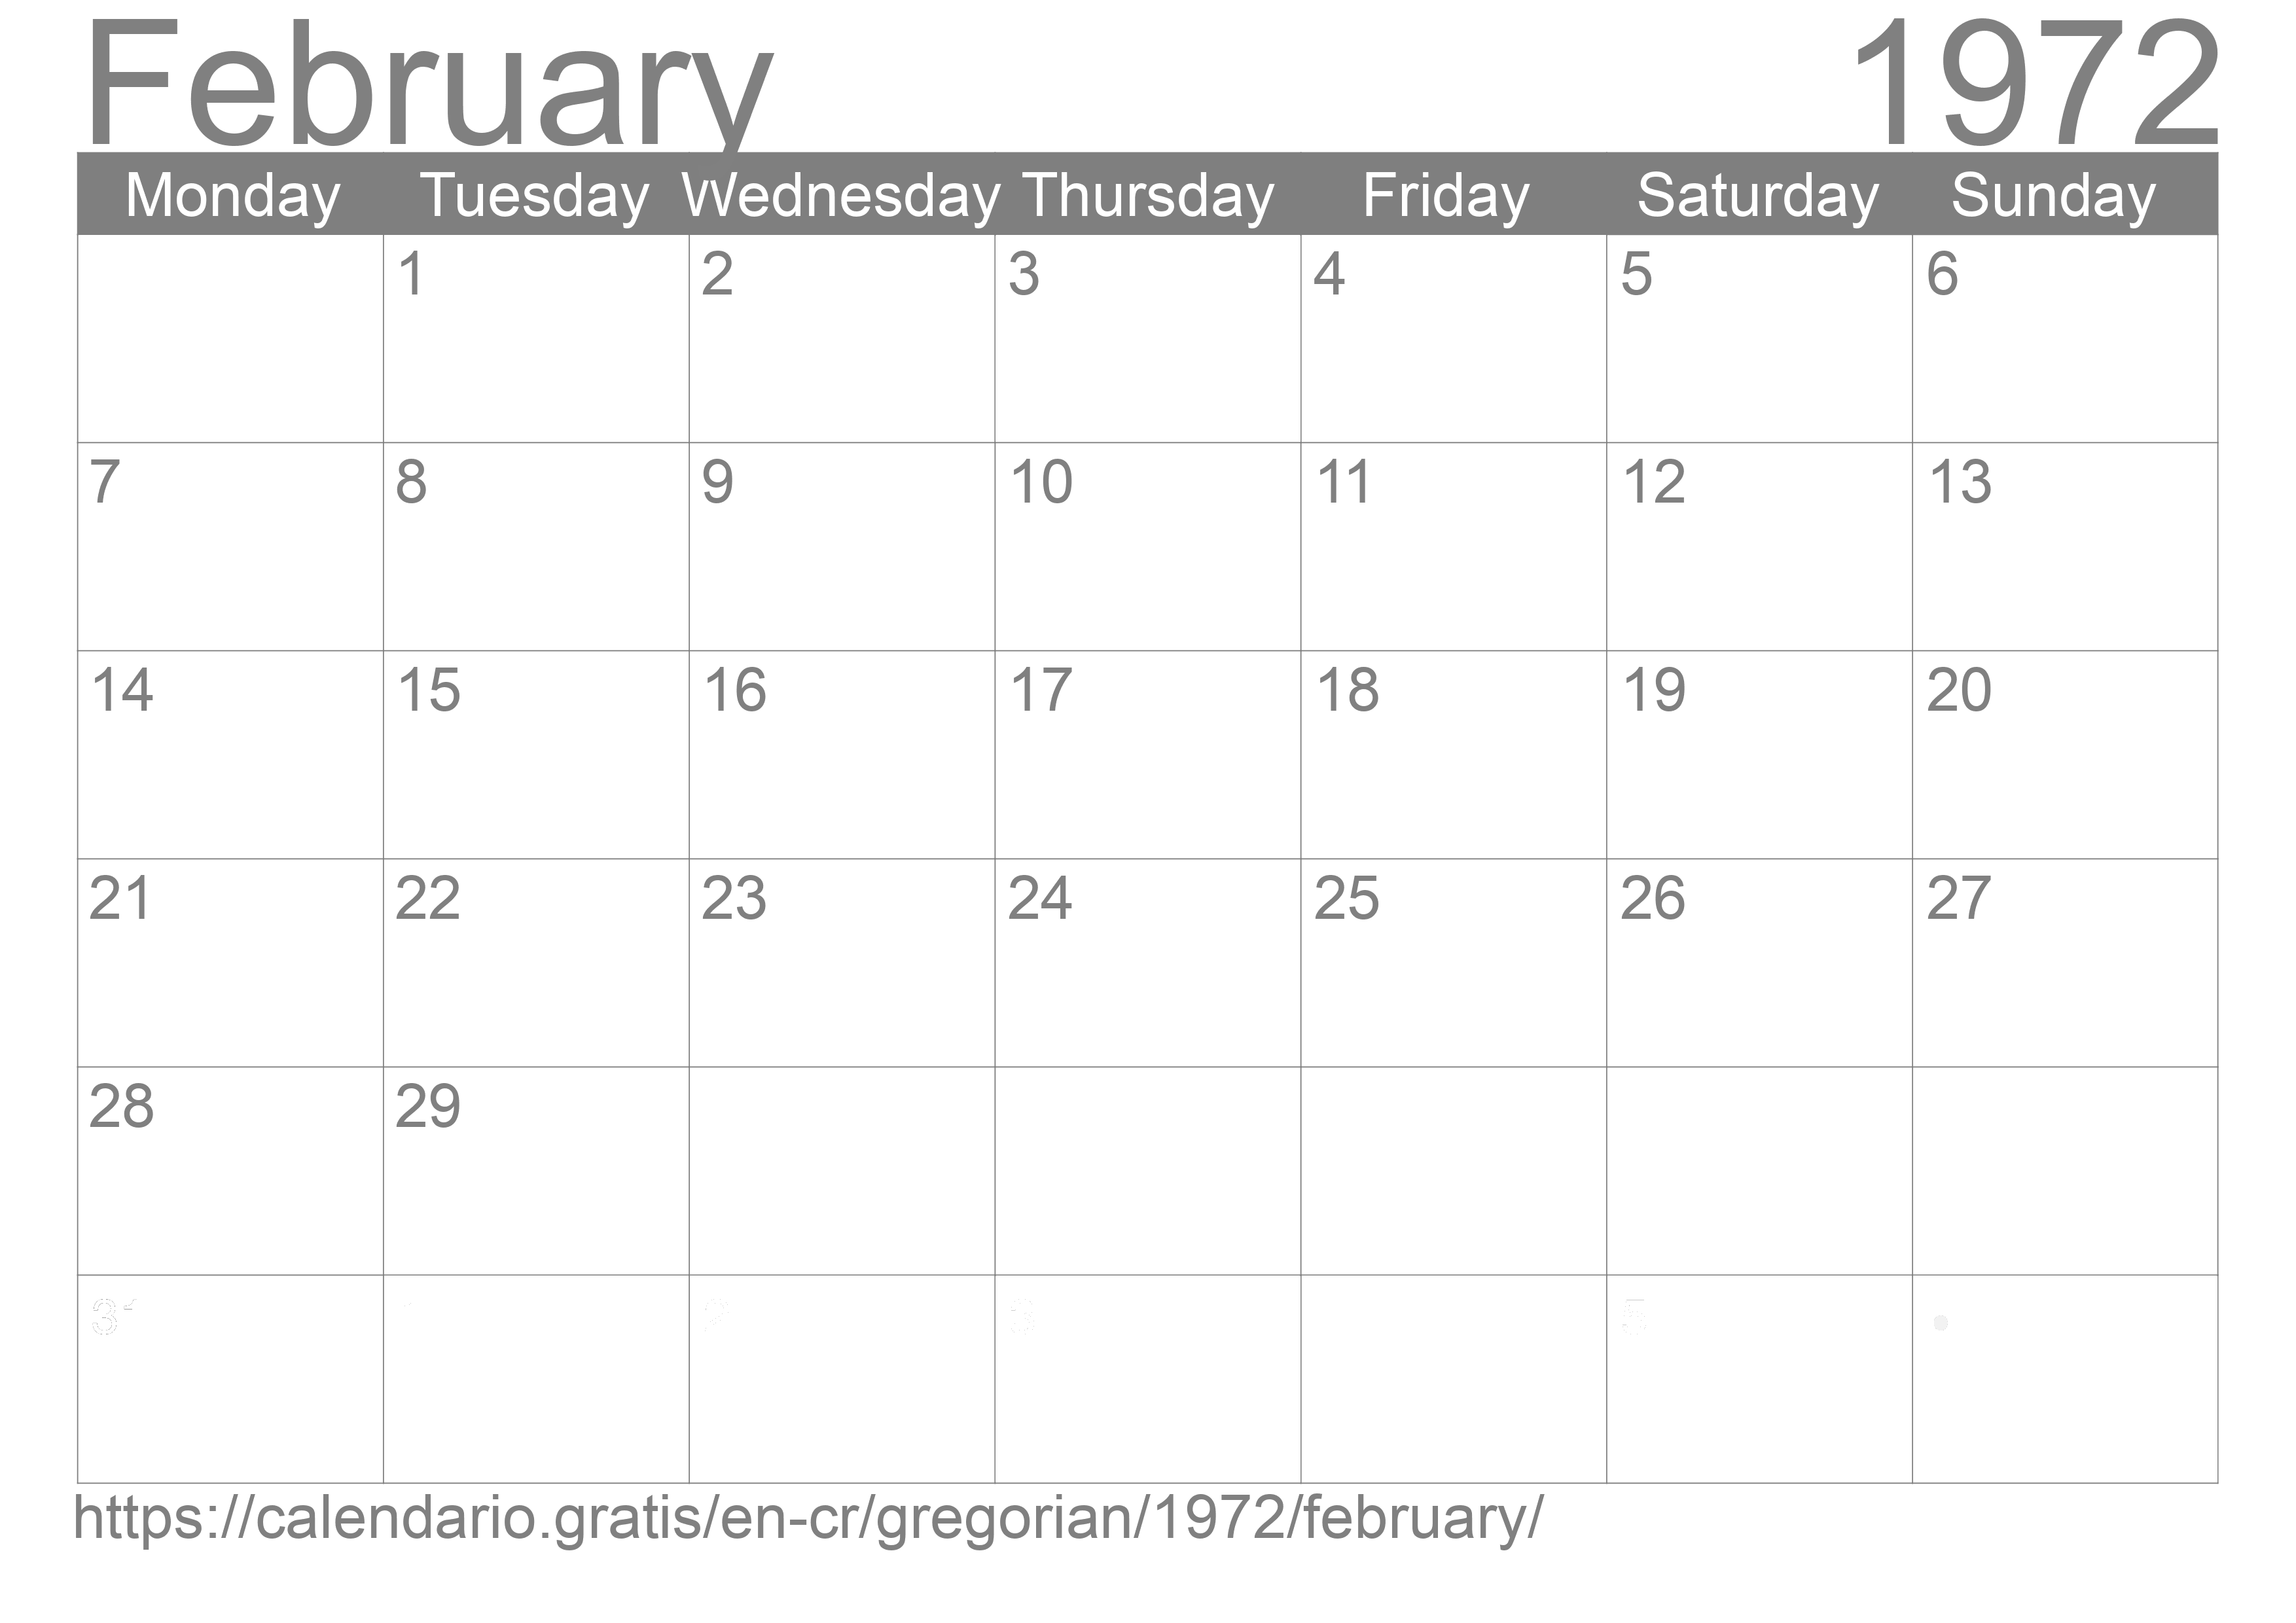 Calendar February 1972 to print